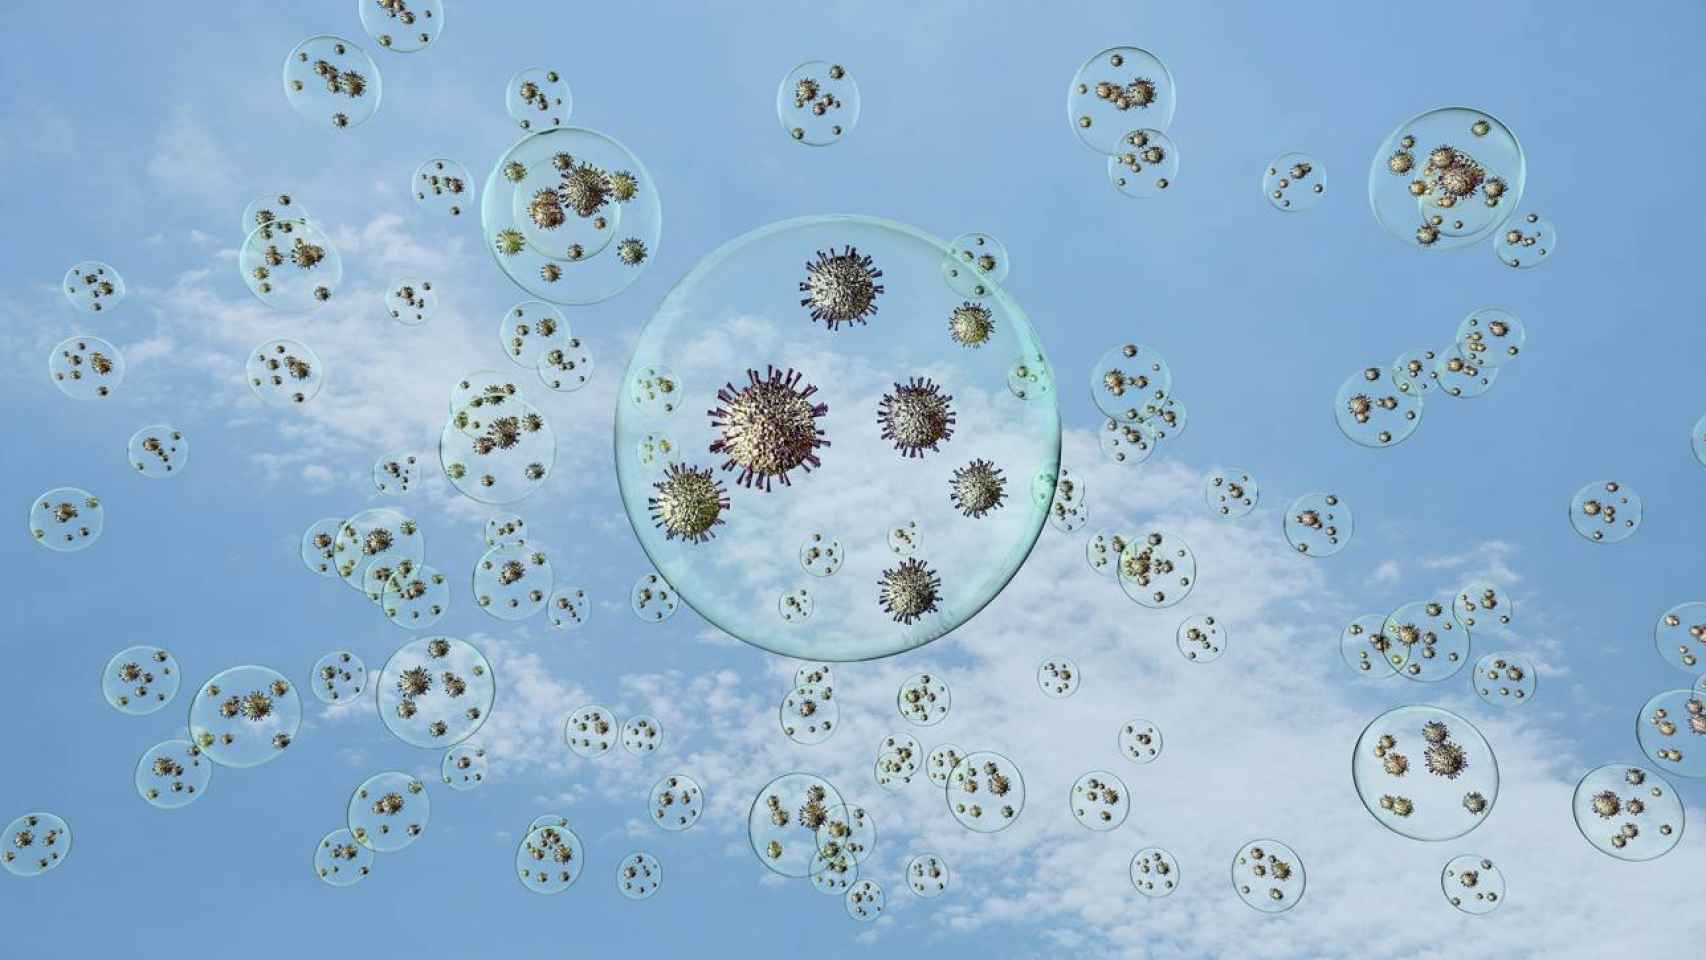 Recreación artística de coronavirus flotando en el aire dentro de gotitas. Adobe Stock / Agencia SINC